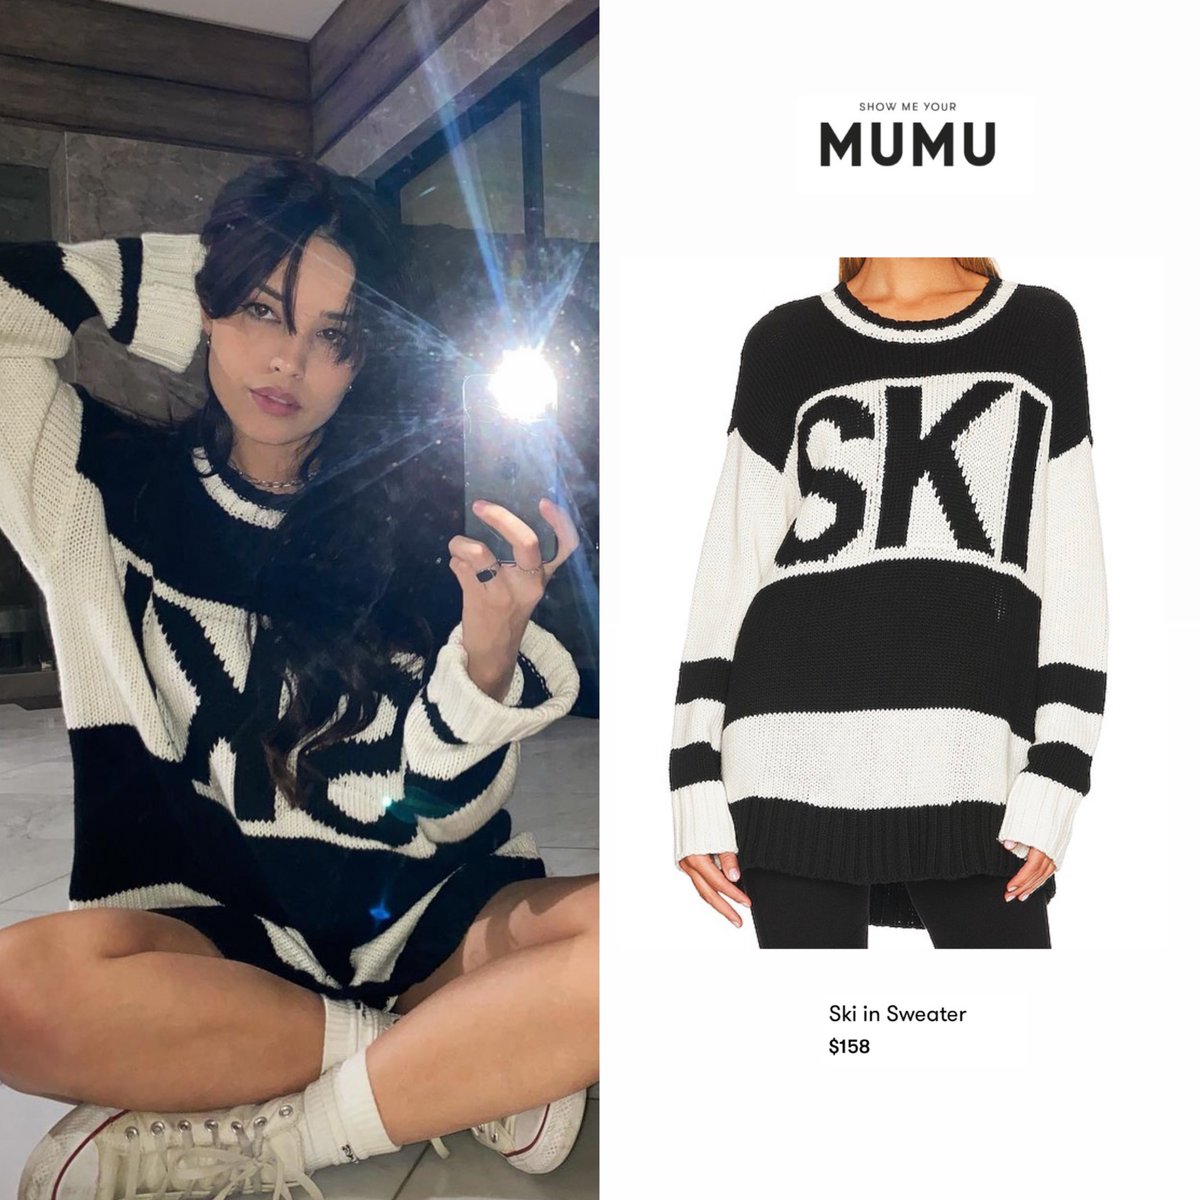 valkyrae on her recent IG post she’s wearing:
@ShowMeYourMumu ski in sweater ($158)